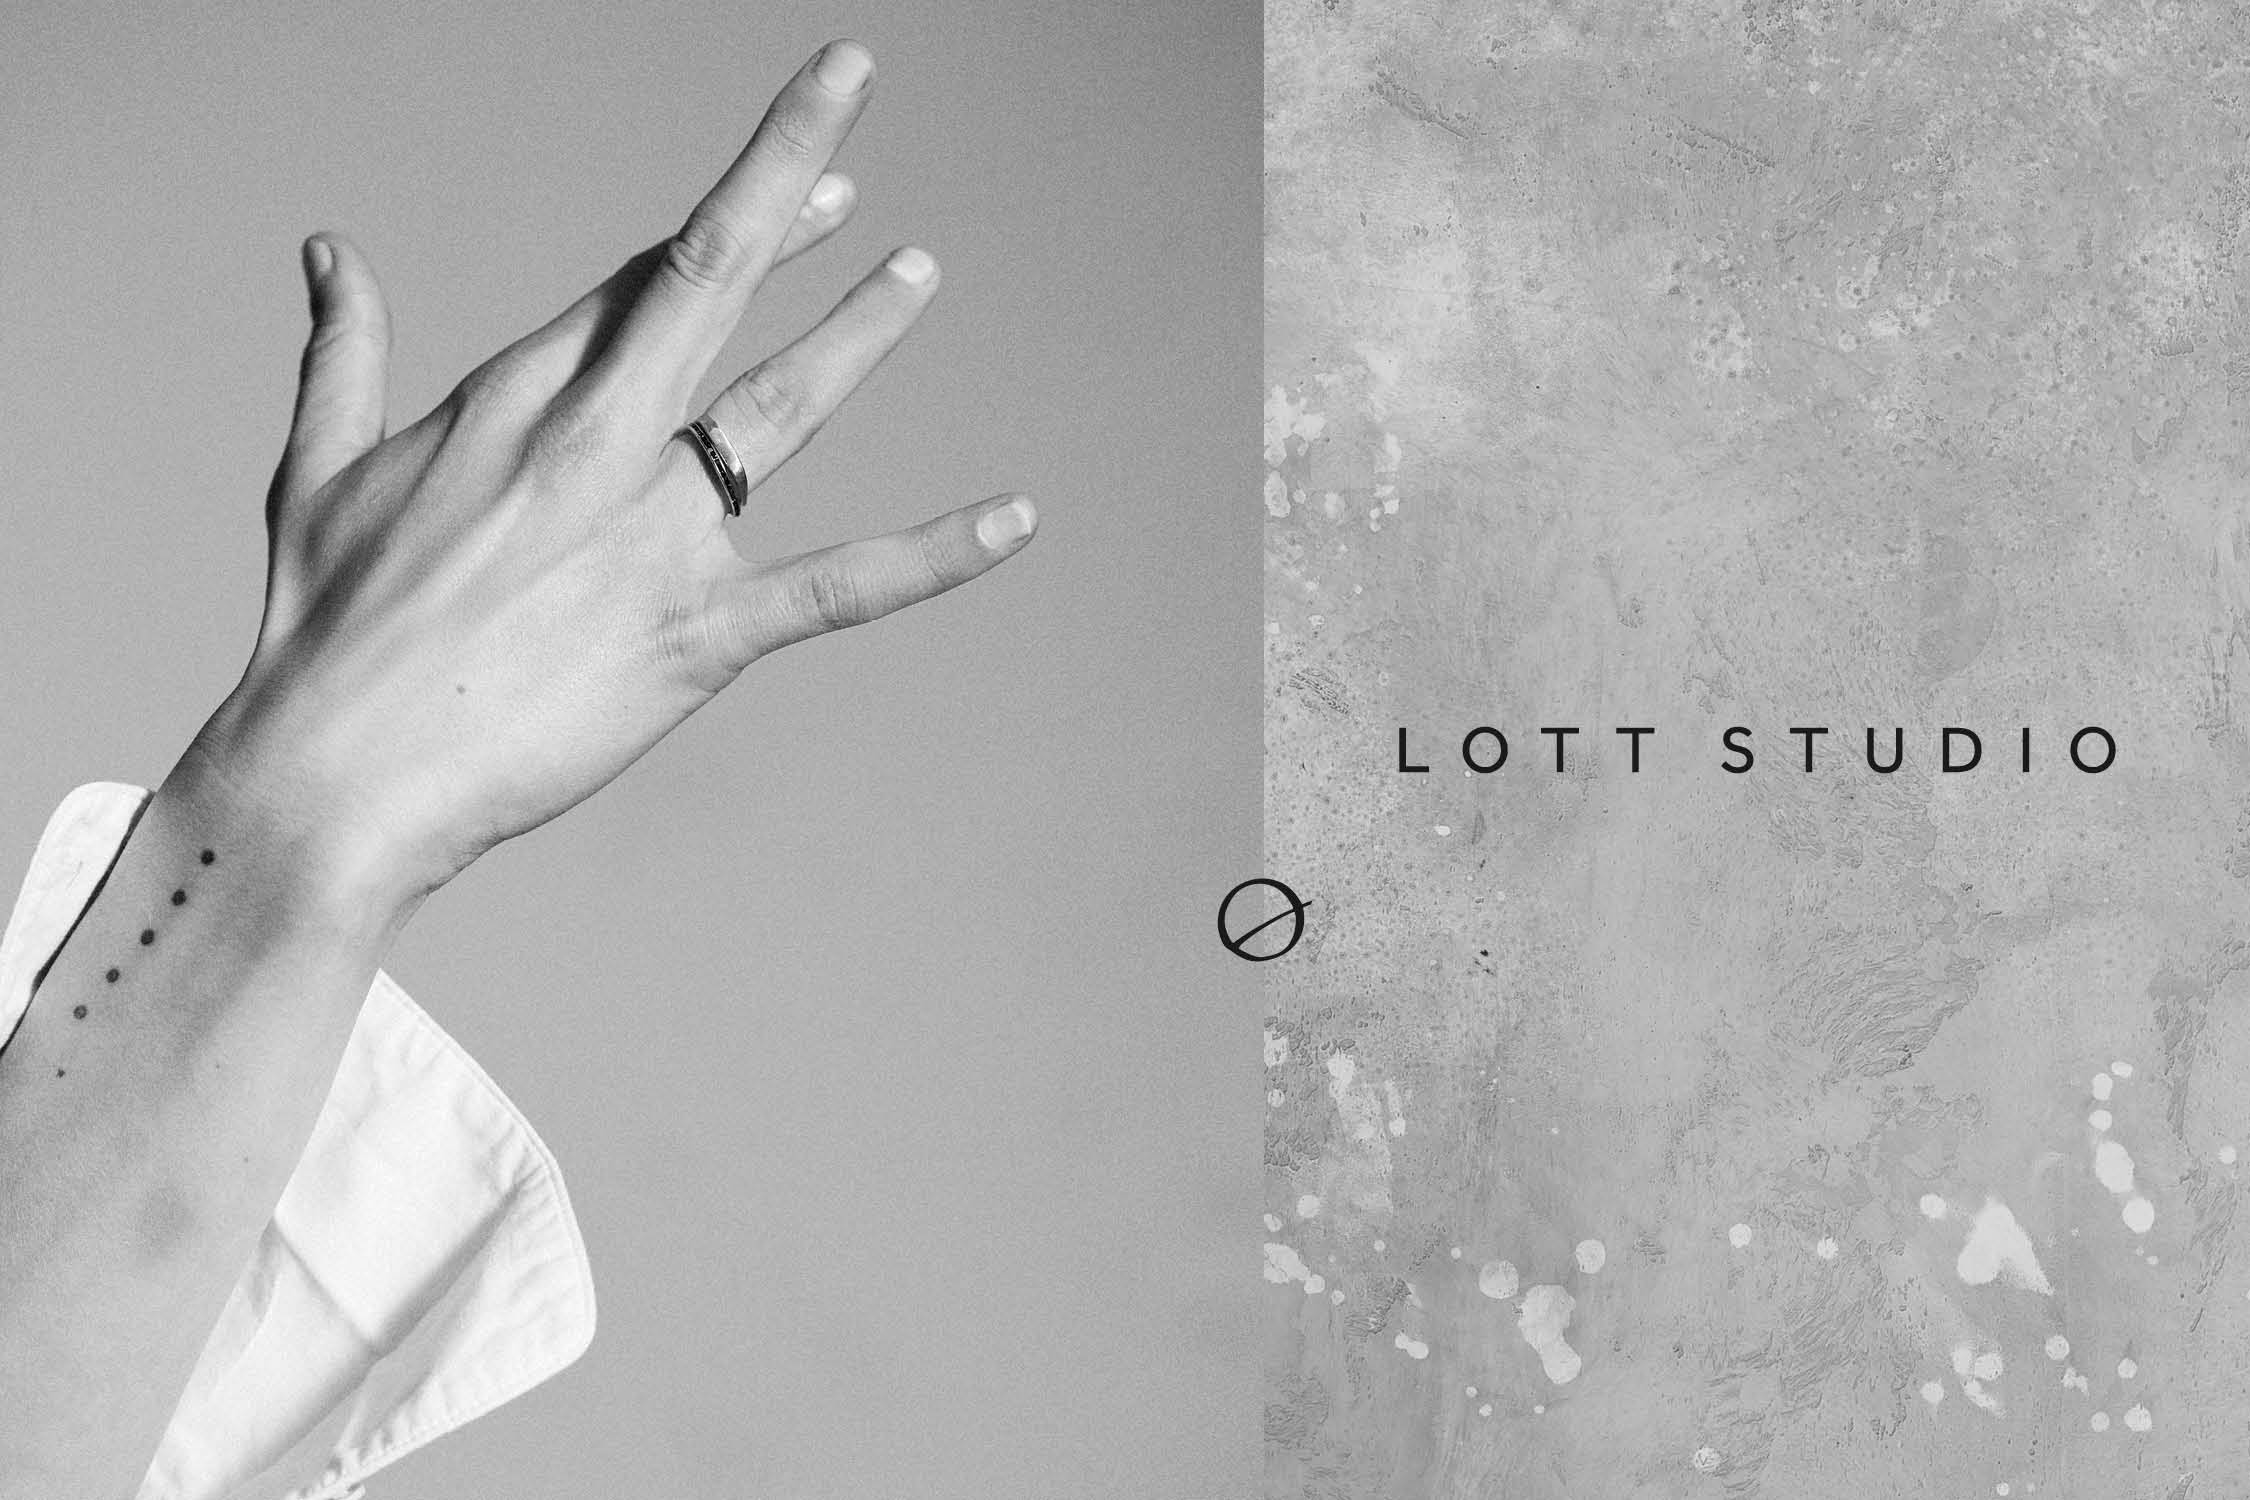 LG-FOLIO-LOTT-STUDIO-4a